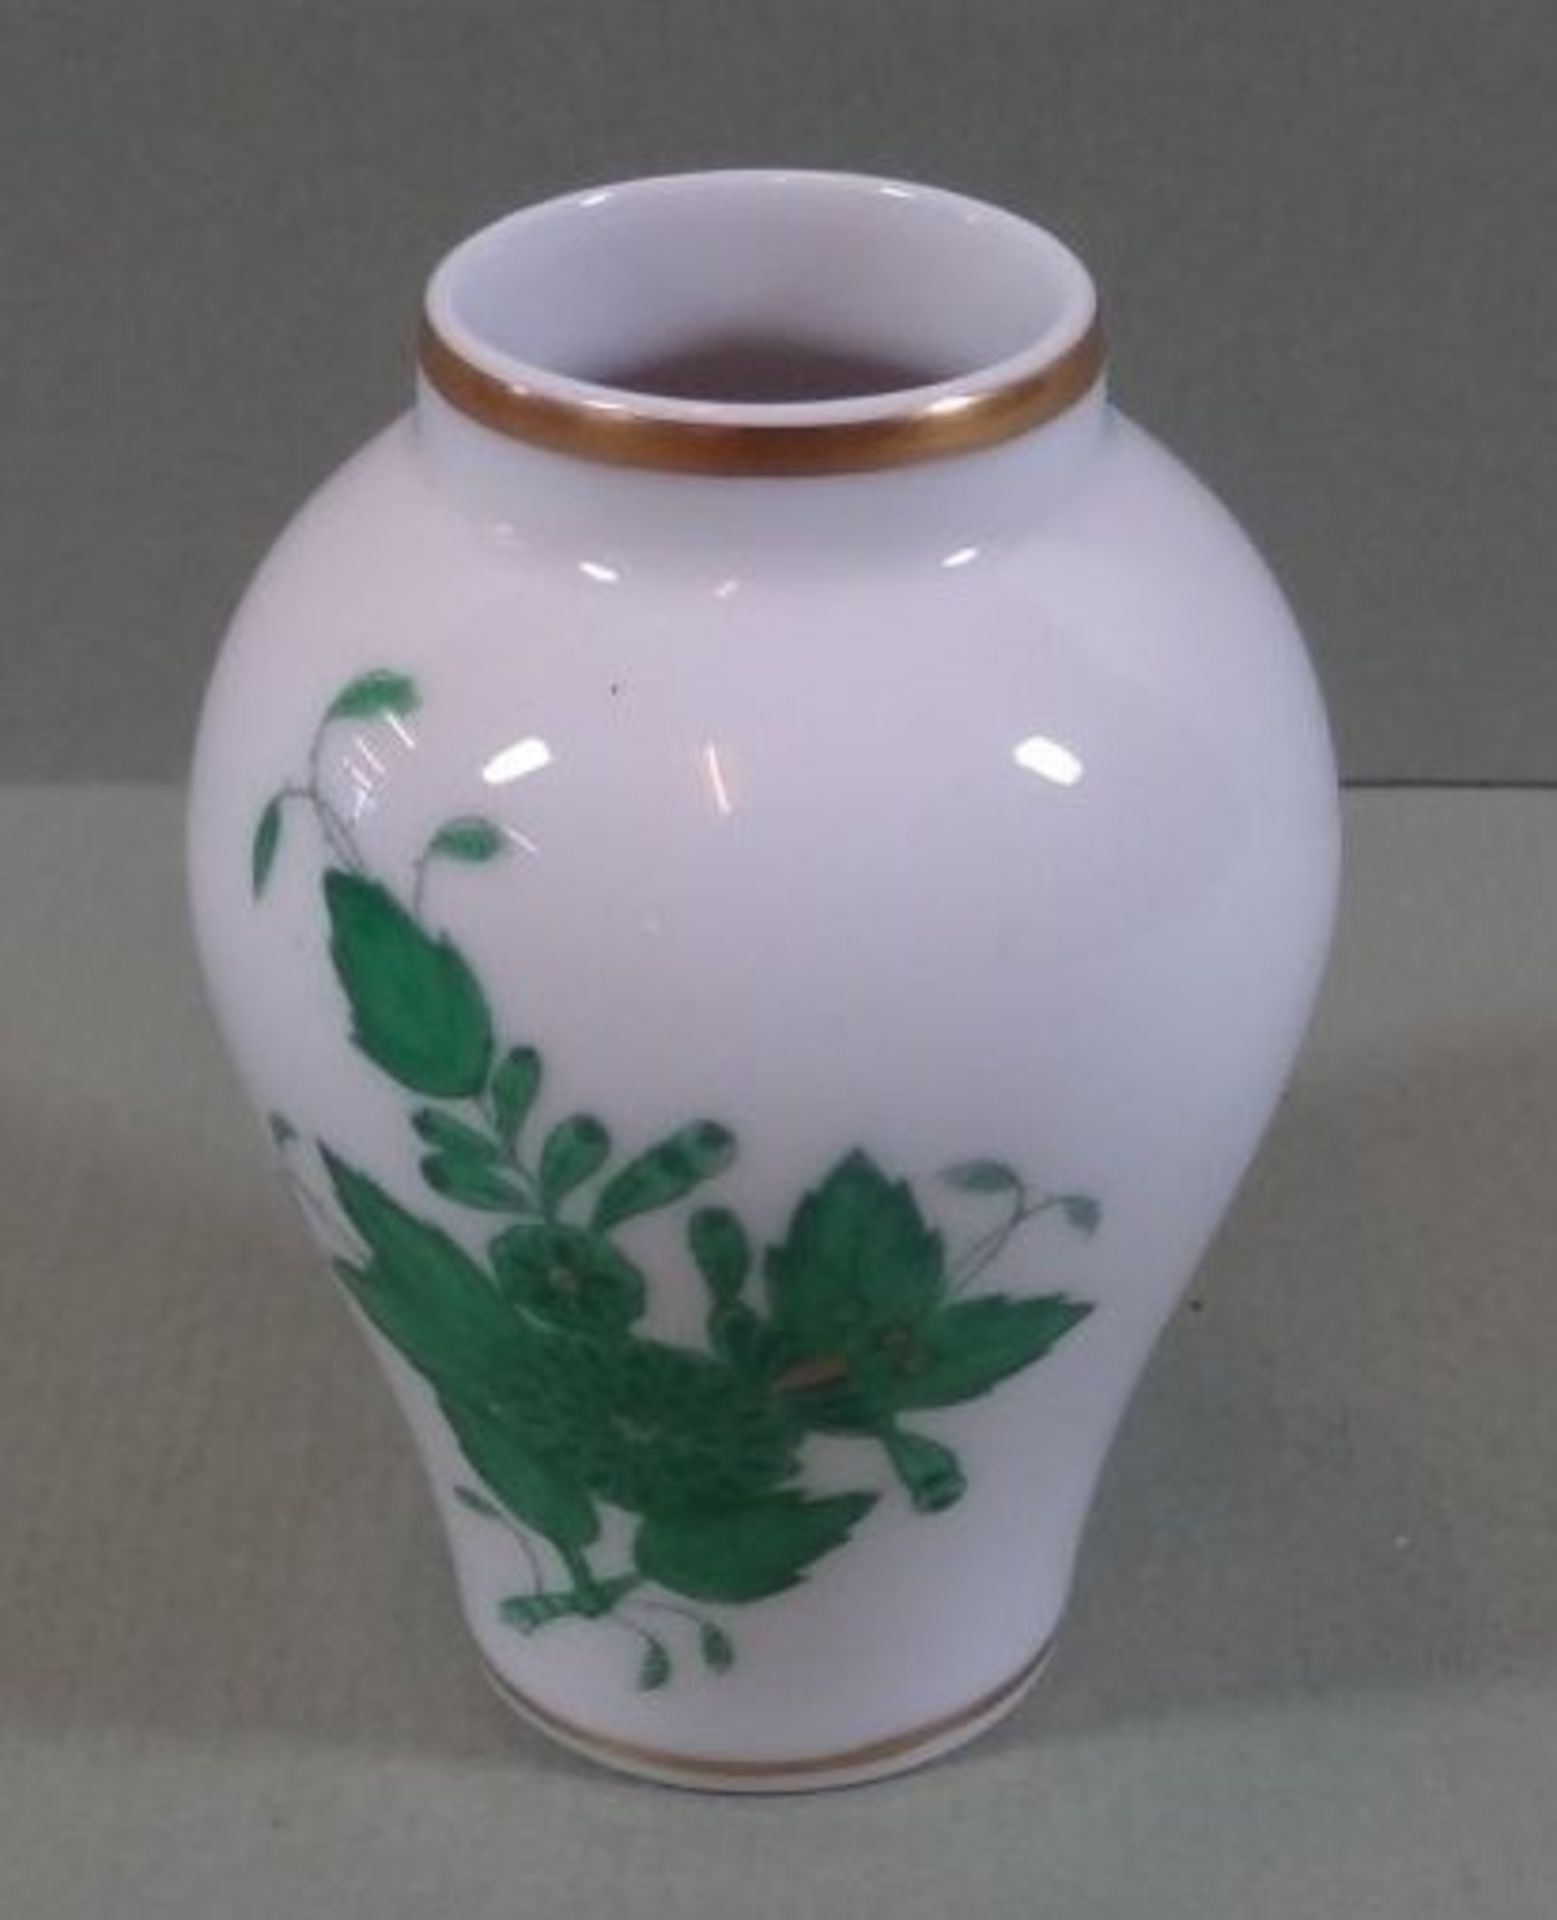 kleine Vase "Herend" Apponyi grün, H-6 cm - Image 2 of 4